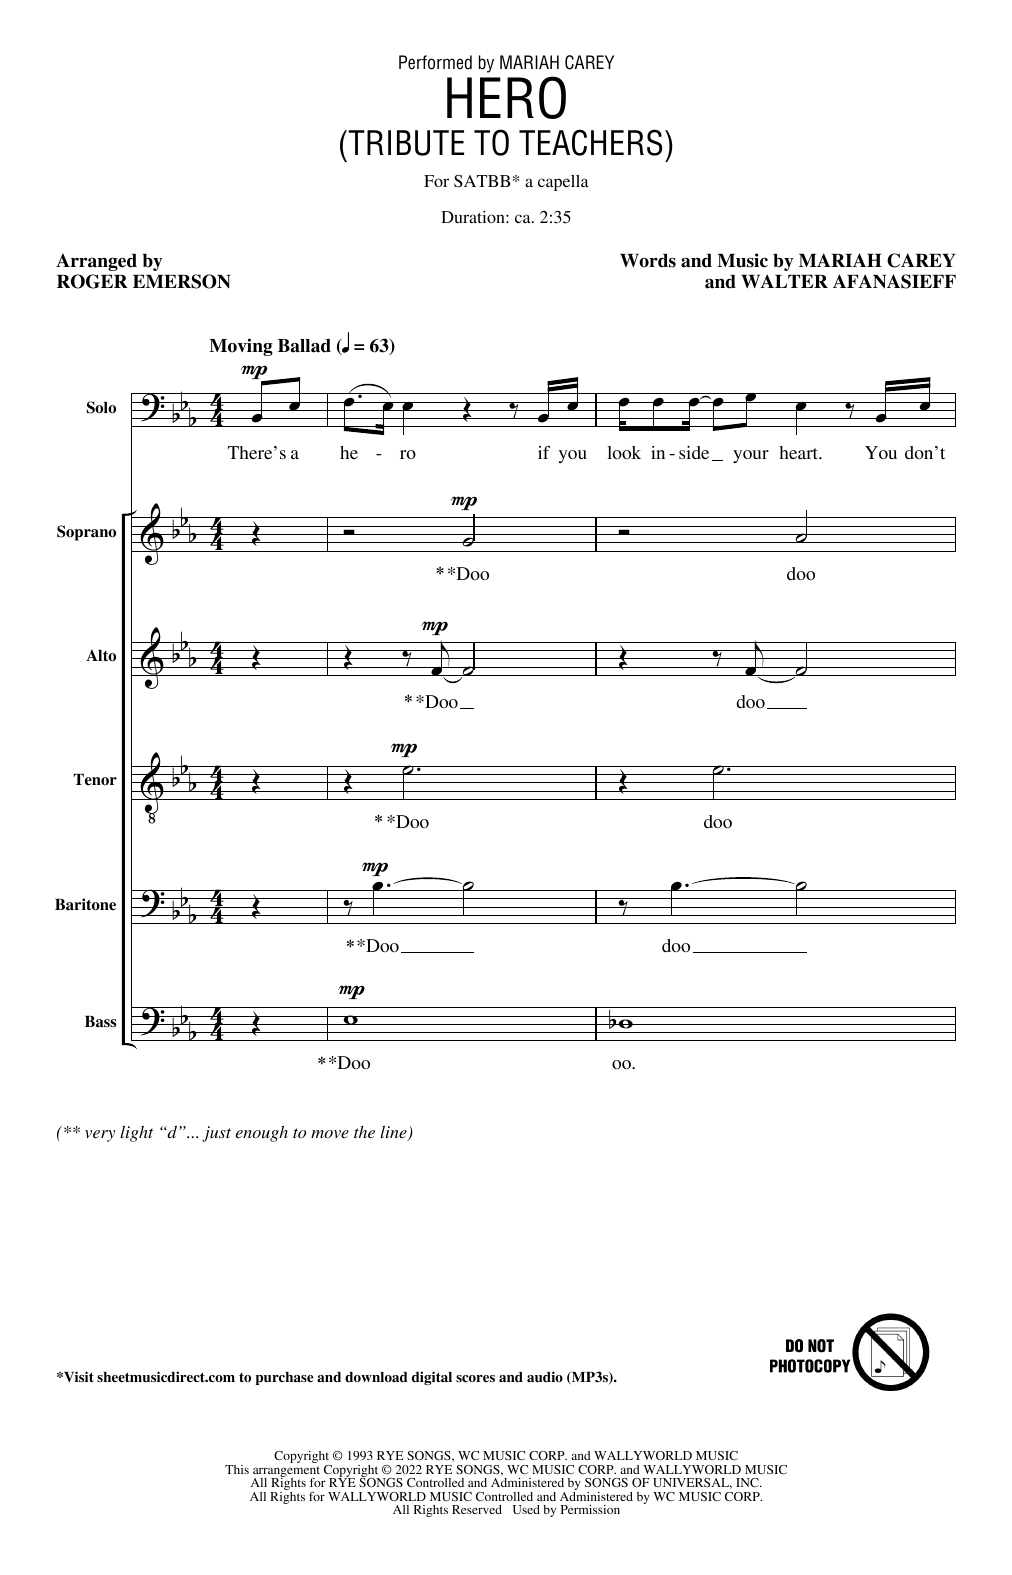 Mariah Carey Hero (Tribute To Teachers) (arr. Roger Emerson) Sheet Music Notes & Chords for SATB Choir - Download or Print PDF